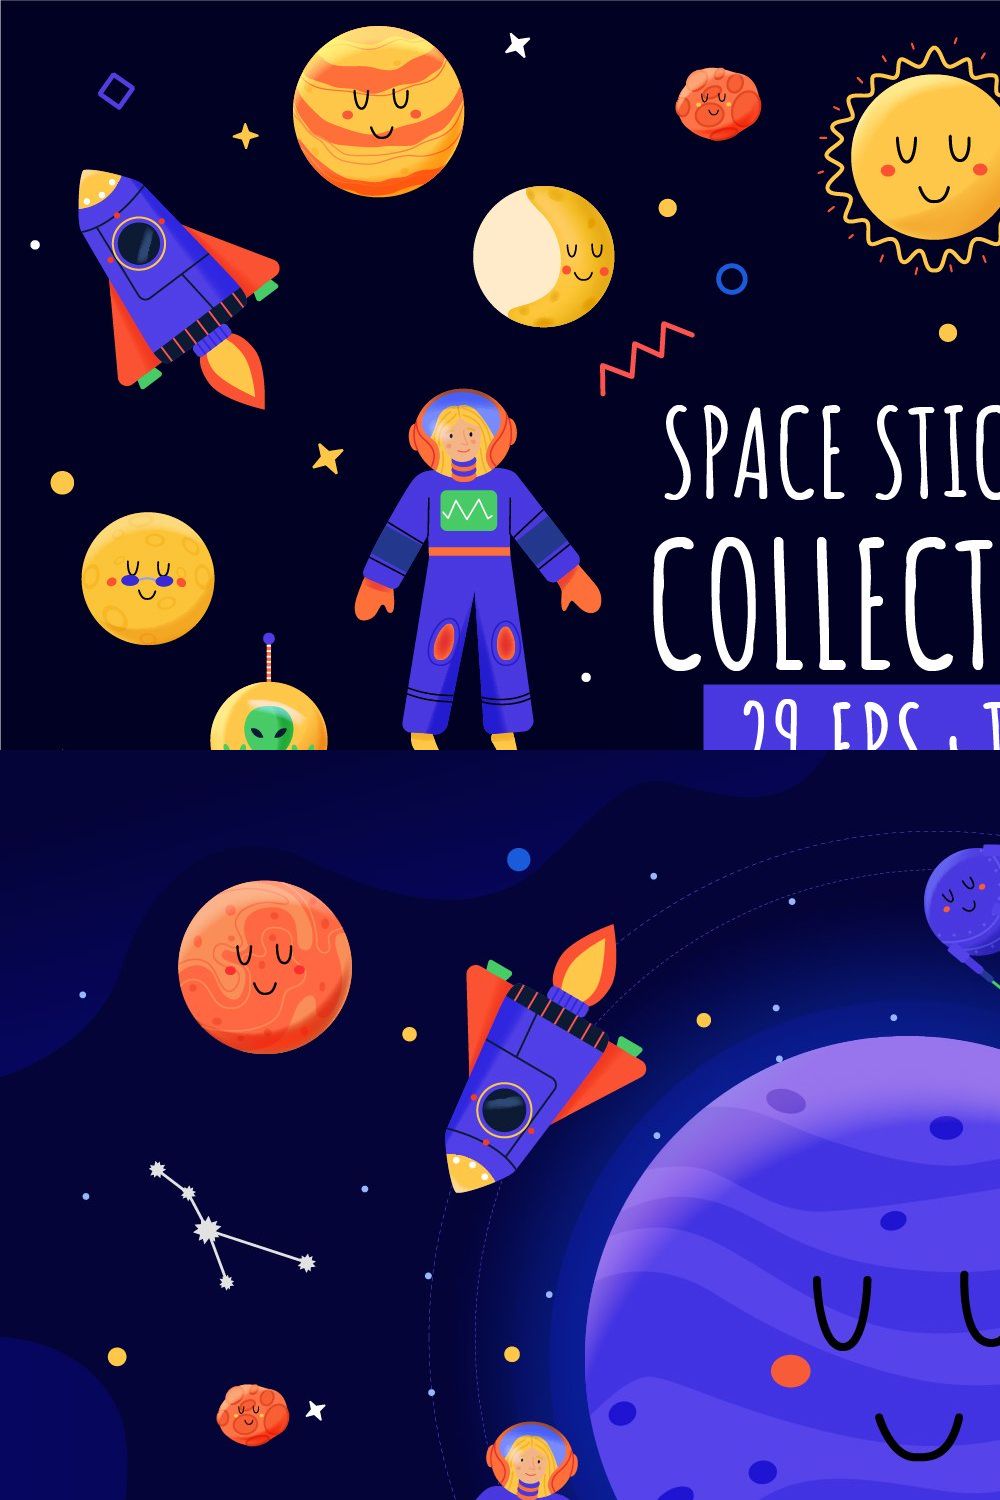 Space - children's cartoon set pinterest preview image.